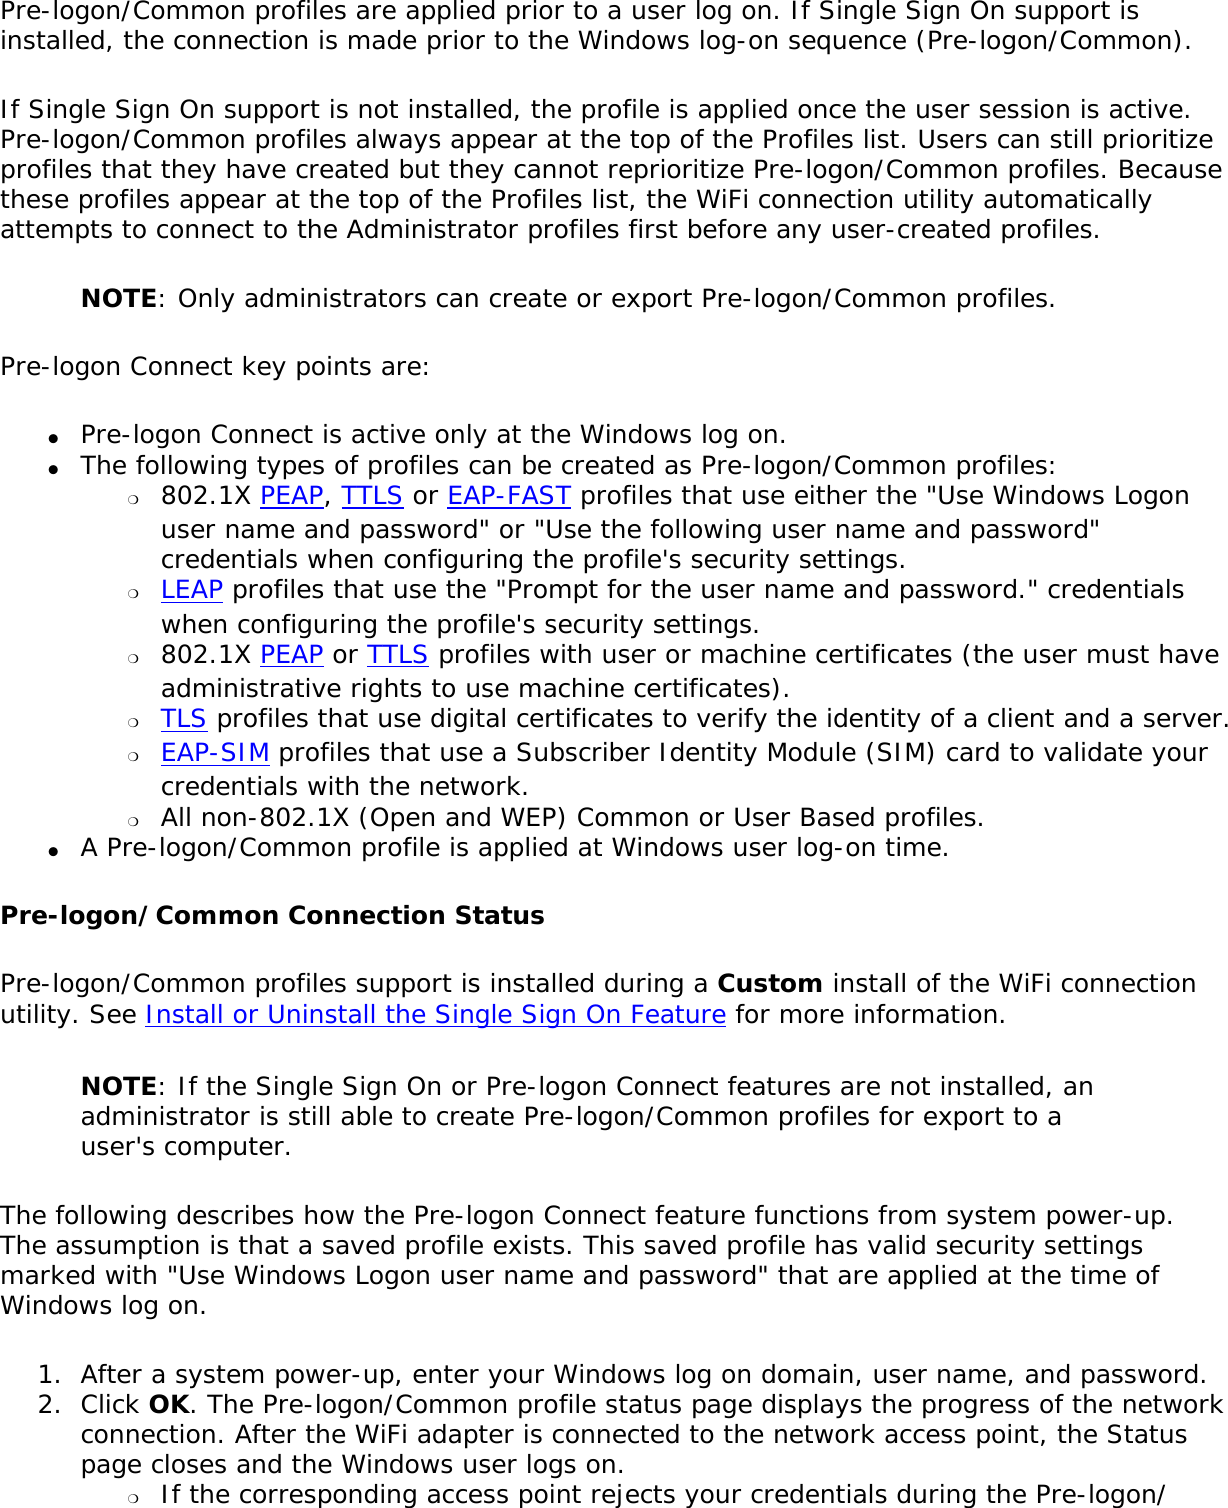 Page 121 of Intel 112BNHU Intel Centrino Wireless-N 1000 User Manual Contents